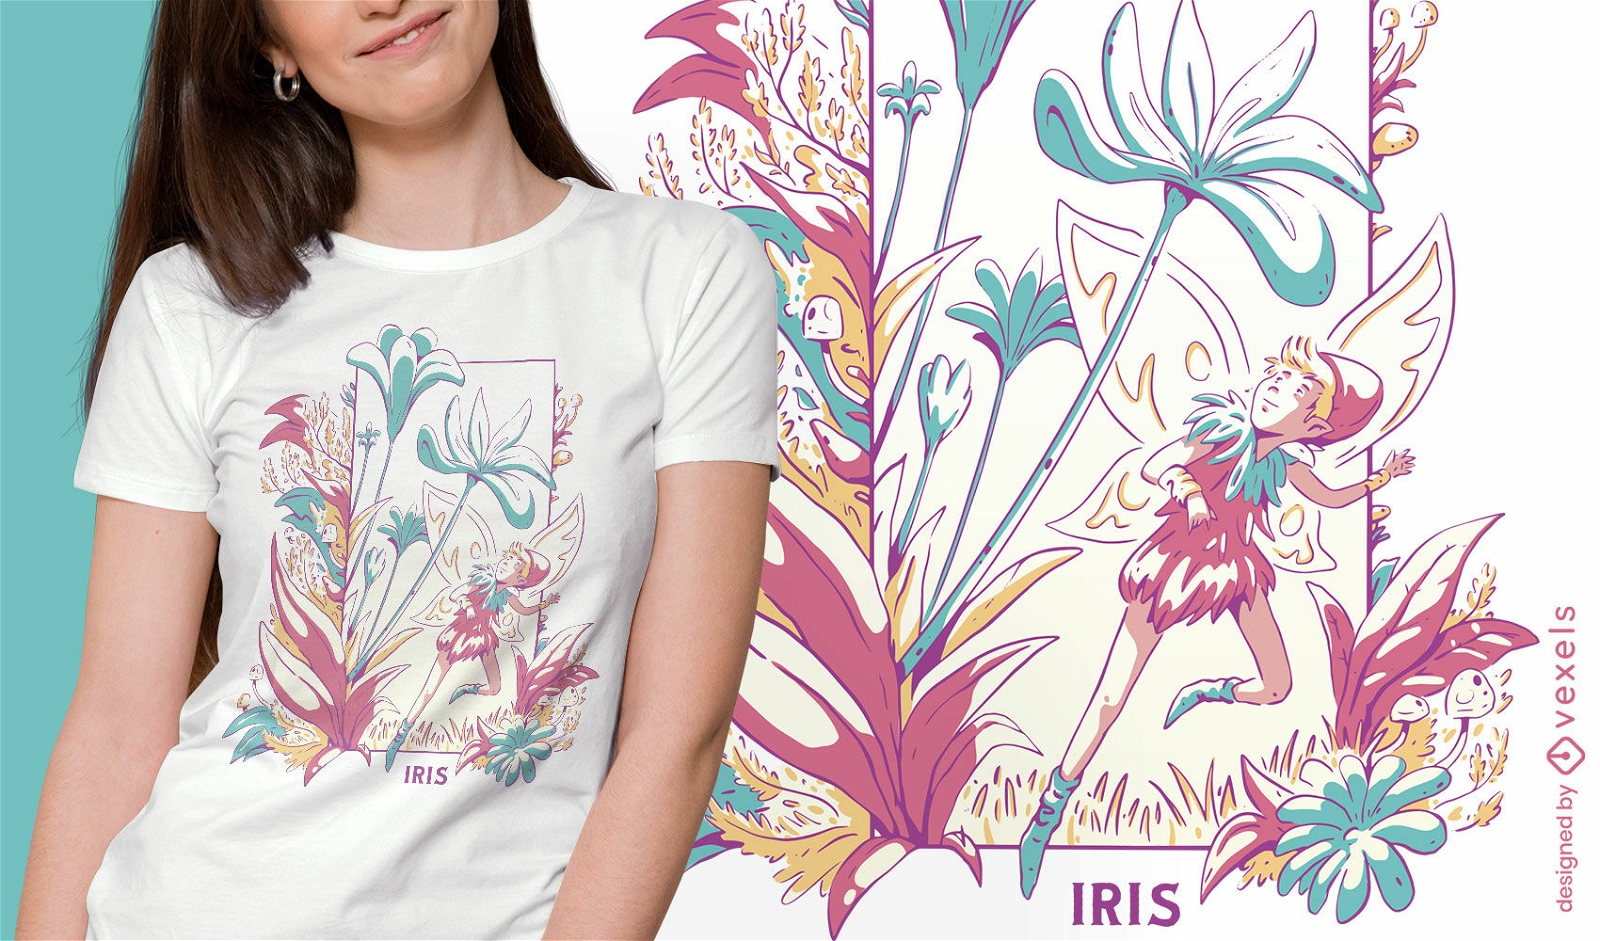 Winged fairy in flower field t-shirt design